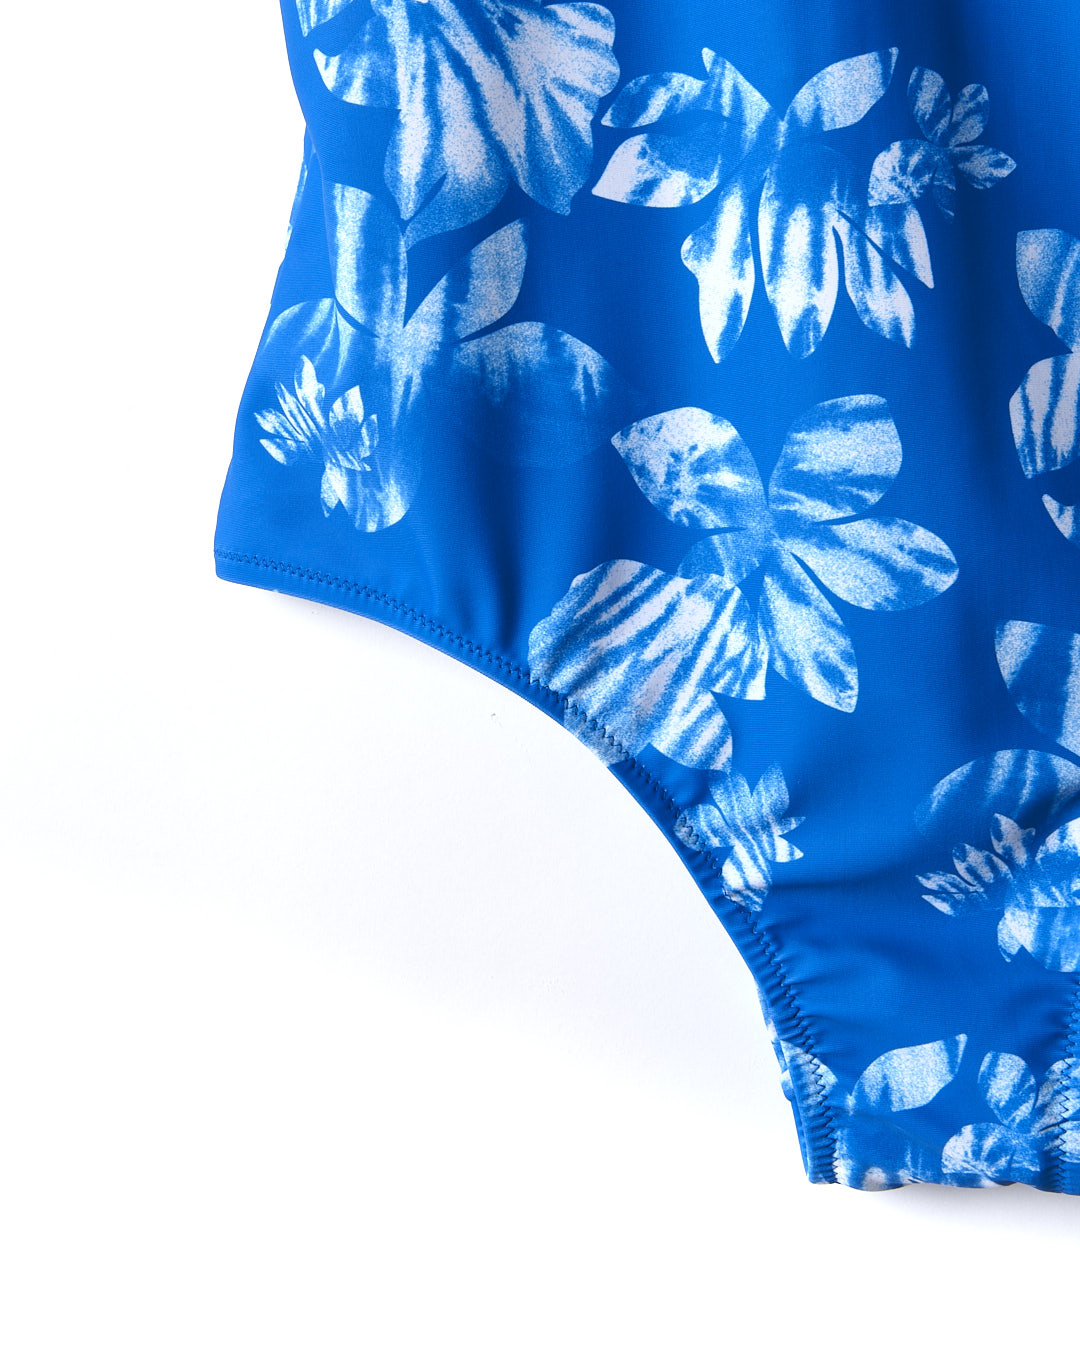 Isla Floral - Womens Swimsuit - Blue